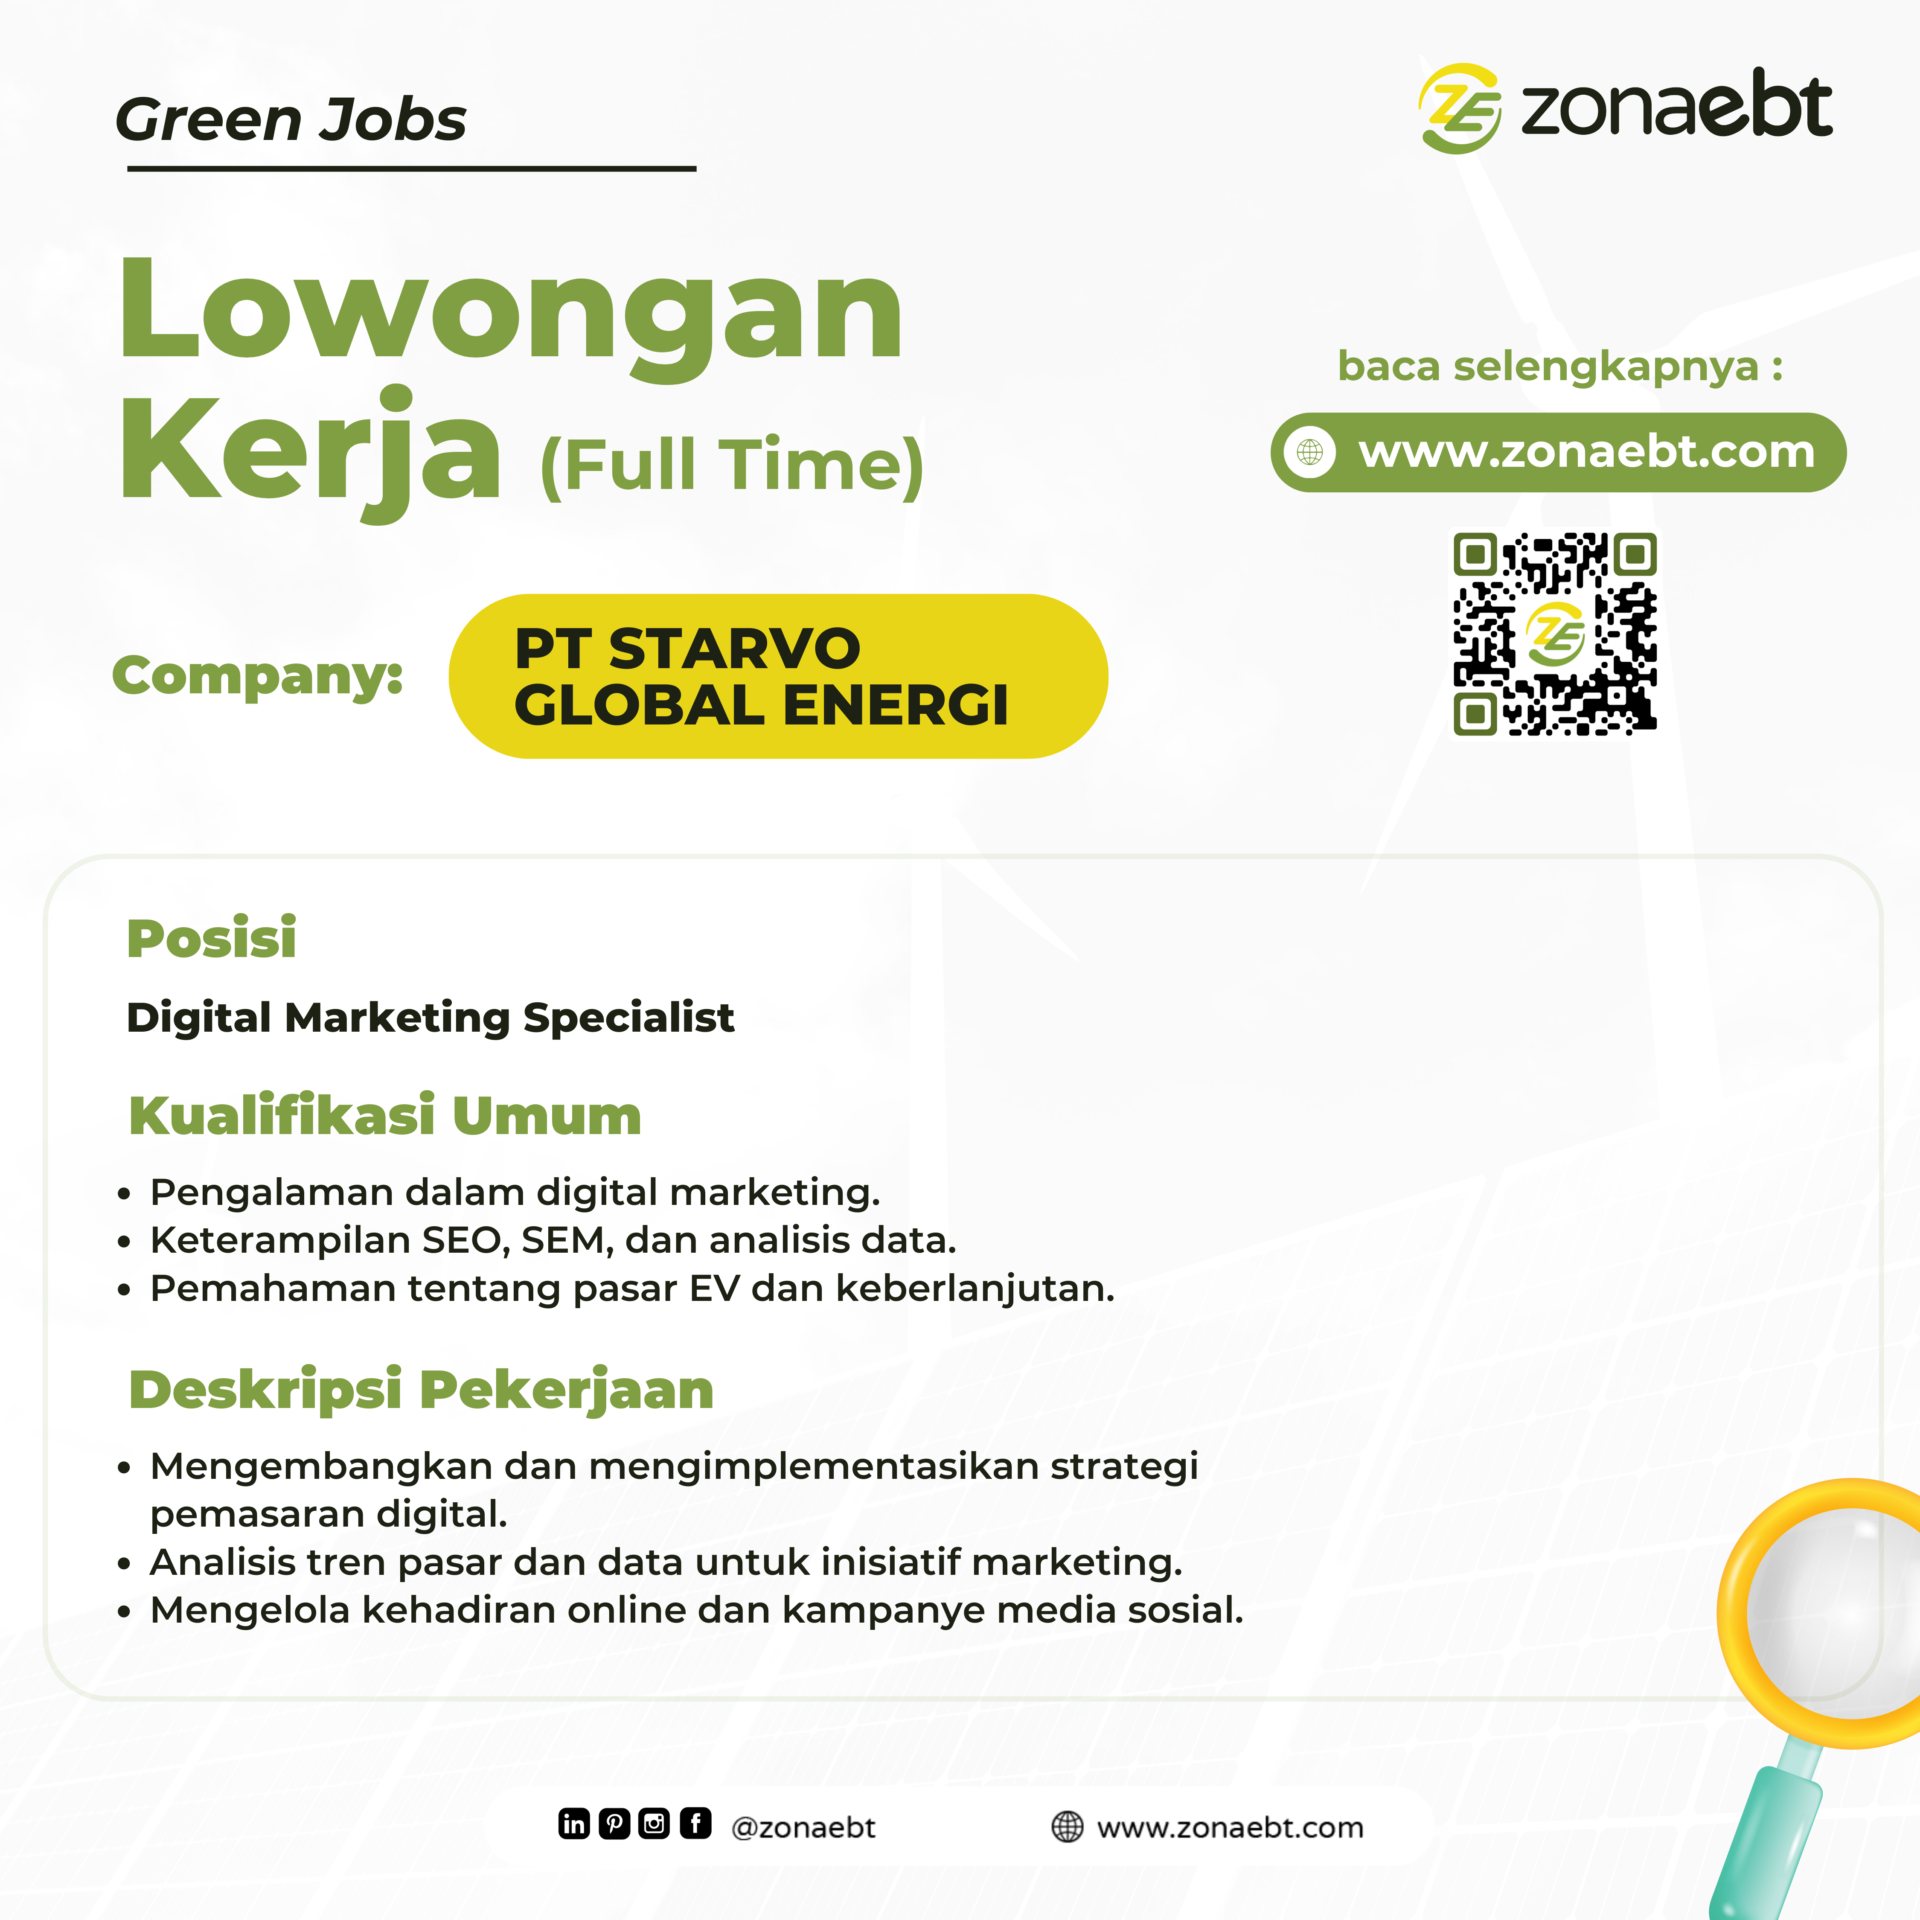 Post Digital Marketing Specialist green jobs zonaebt.com